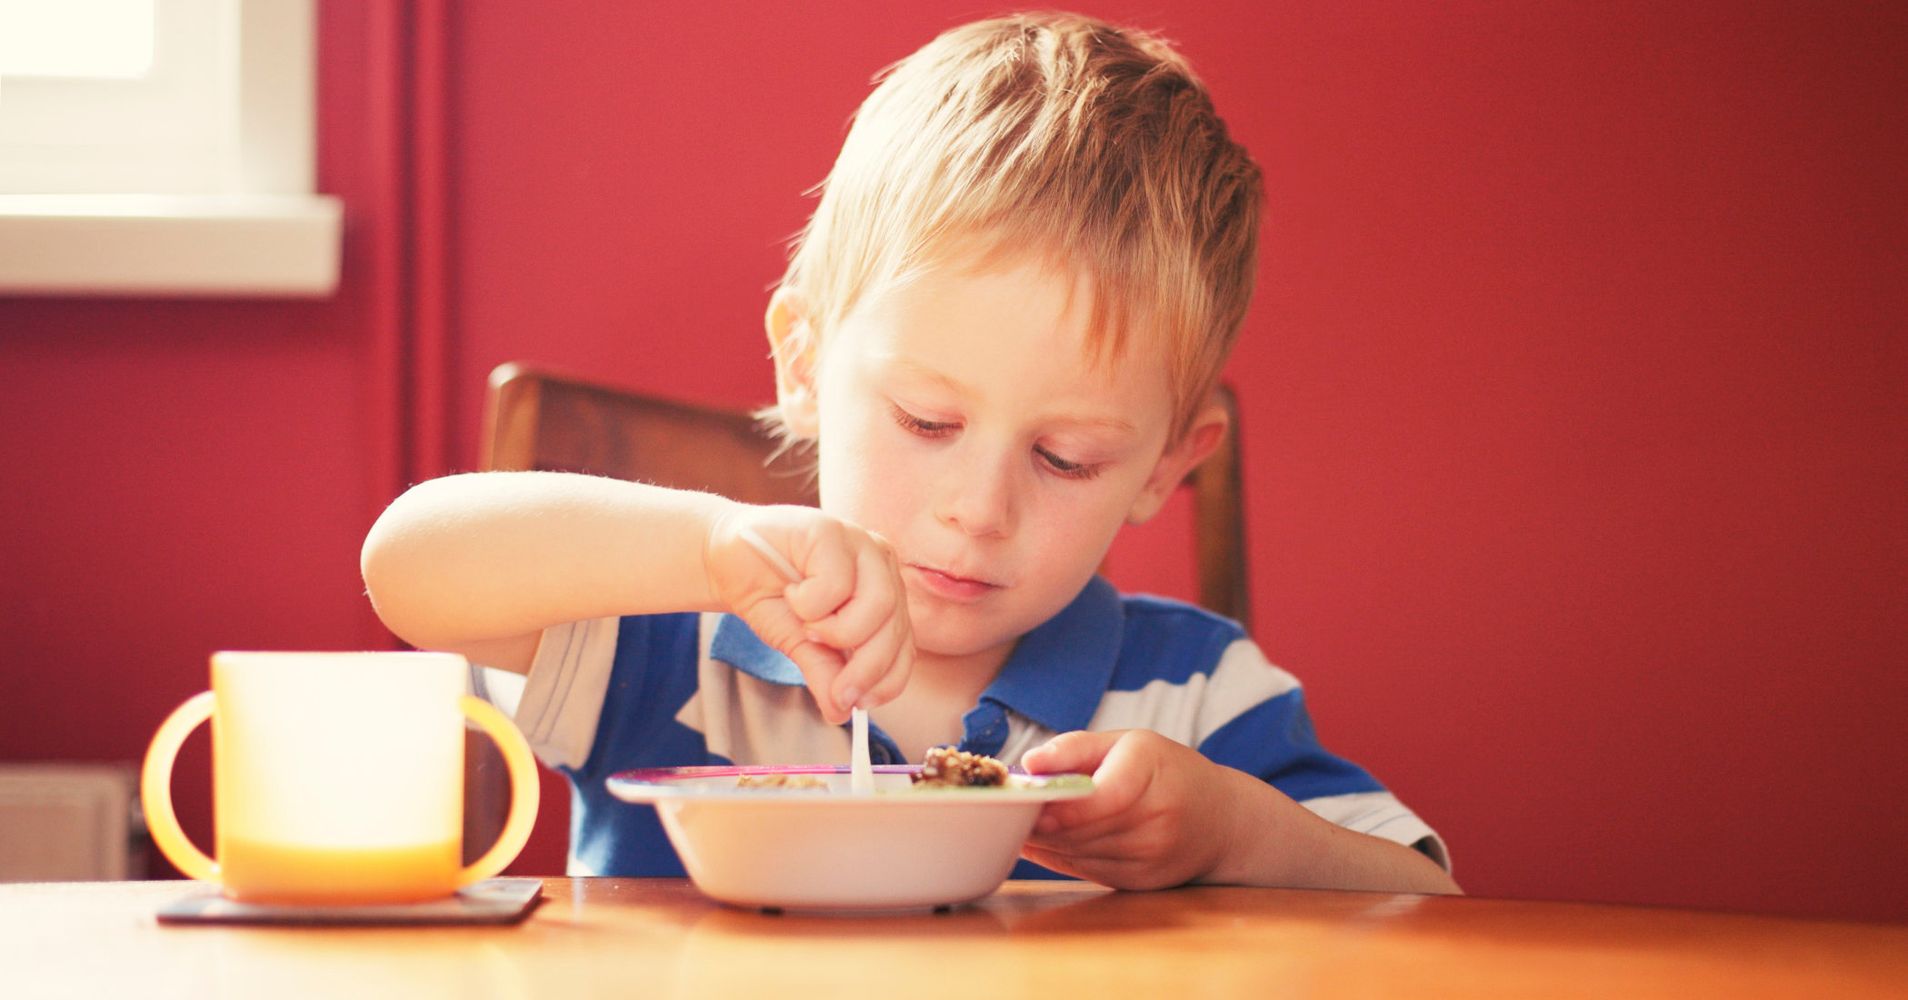 Kids Who Eat A Good Breakfast May Do Better In School | HuffPost